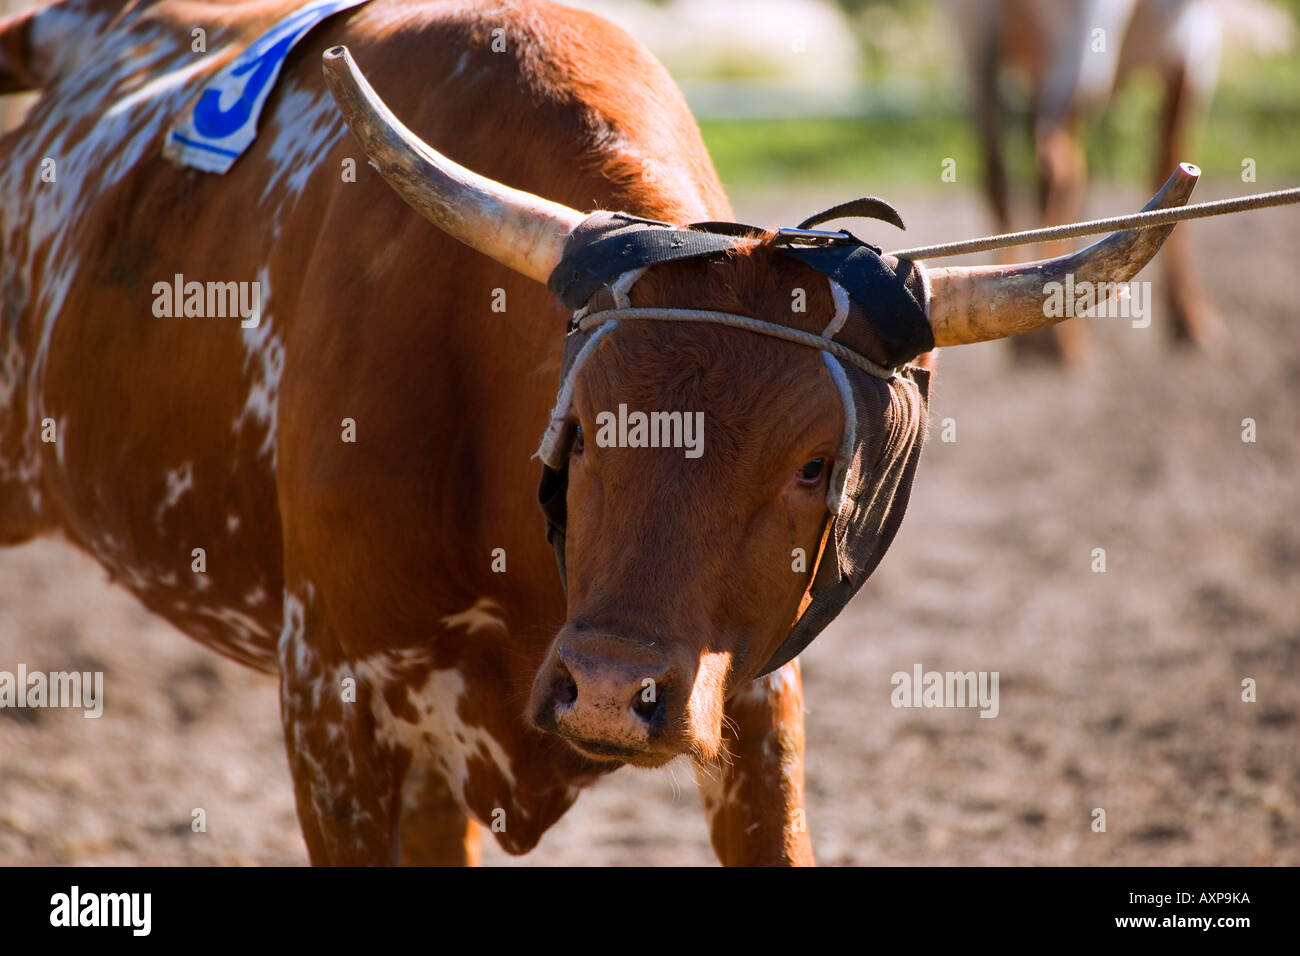 Roping longhorn cattle Stock Photo